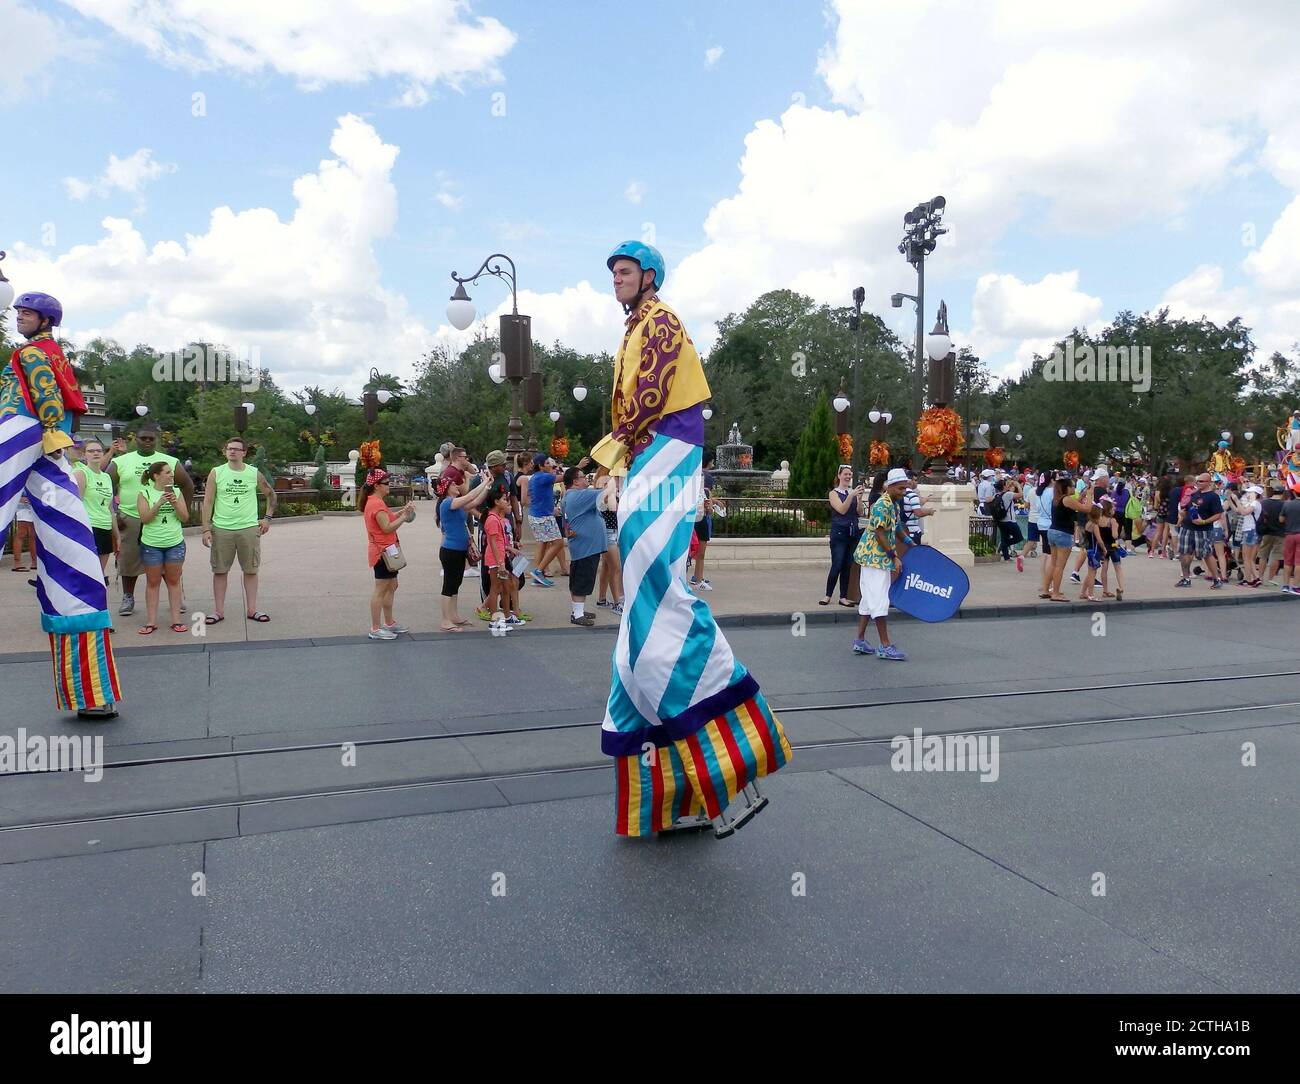 Stilt Walkers in a Disney World parade, Walt Disney World, Orlando Florida, United States Stock Photo